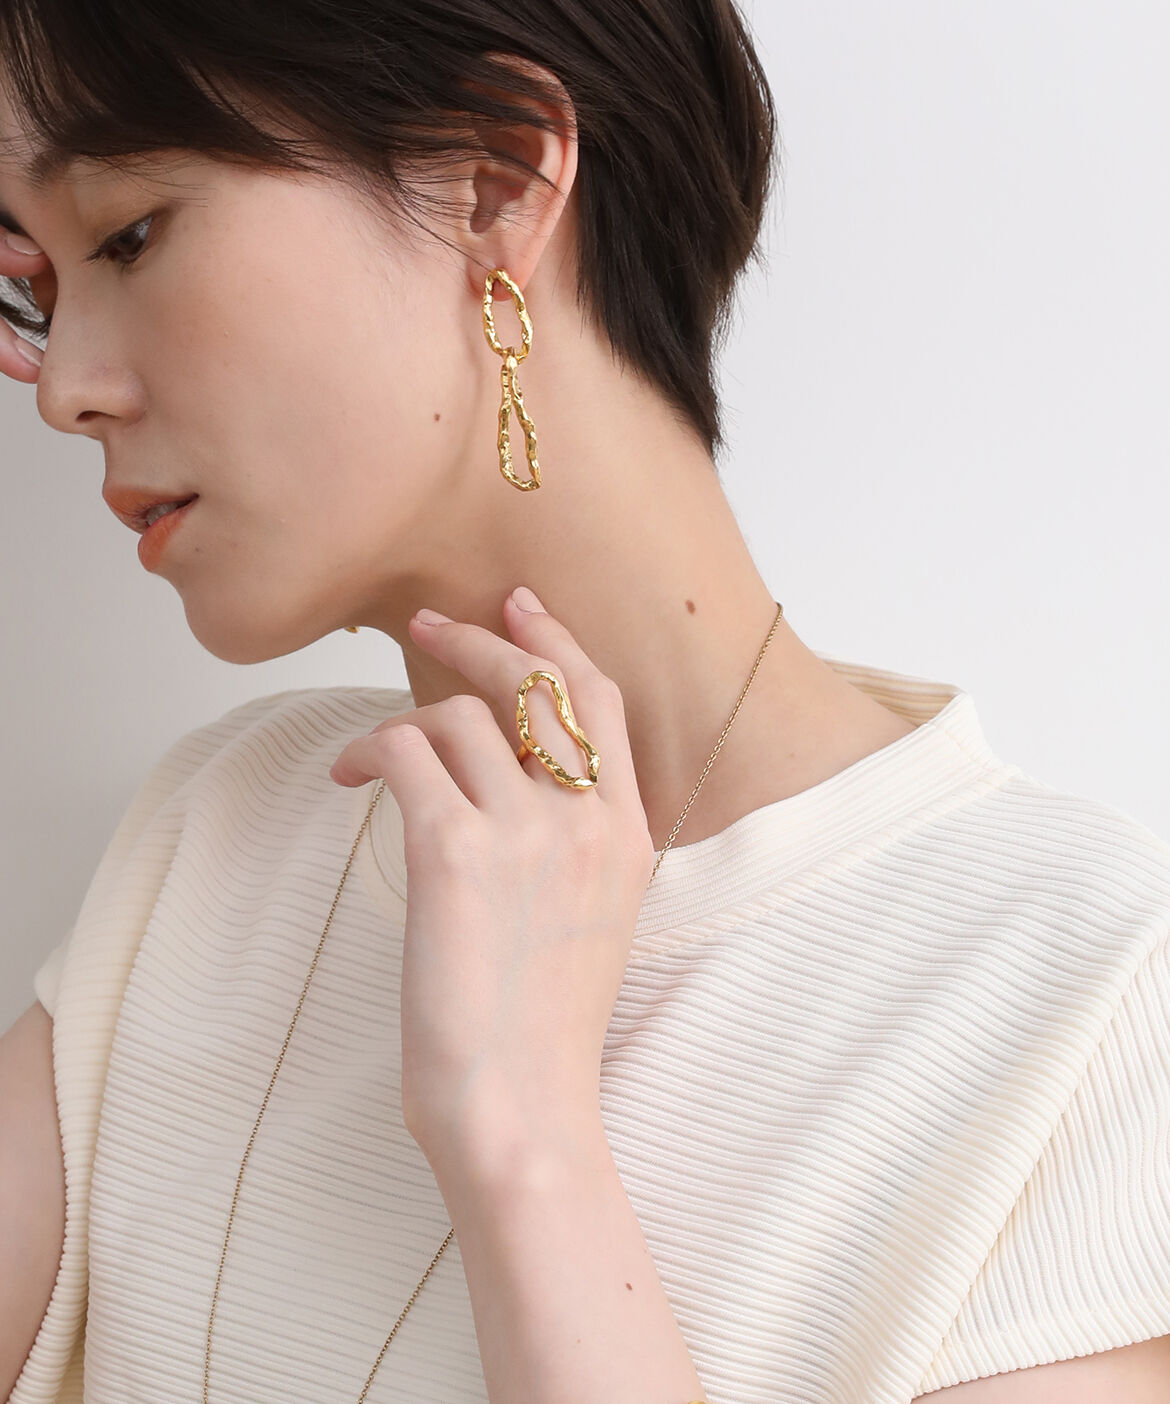 TERRE pierce/earring | ADER.bijoux